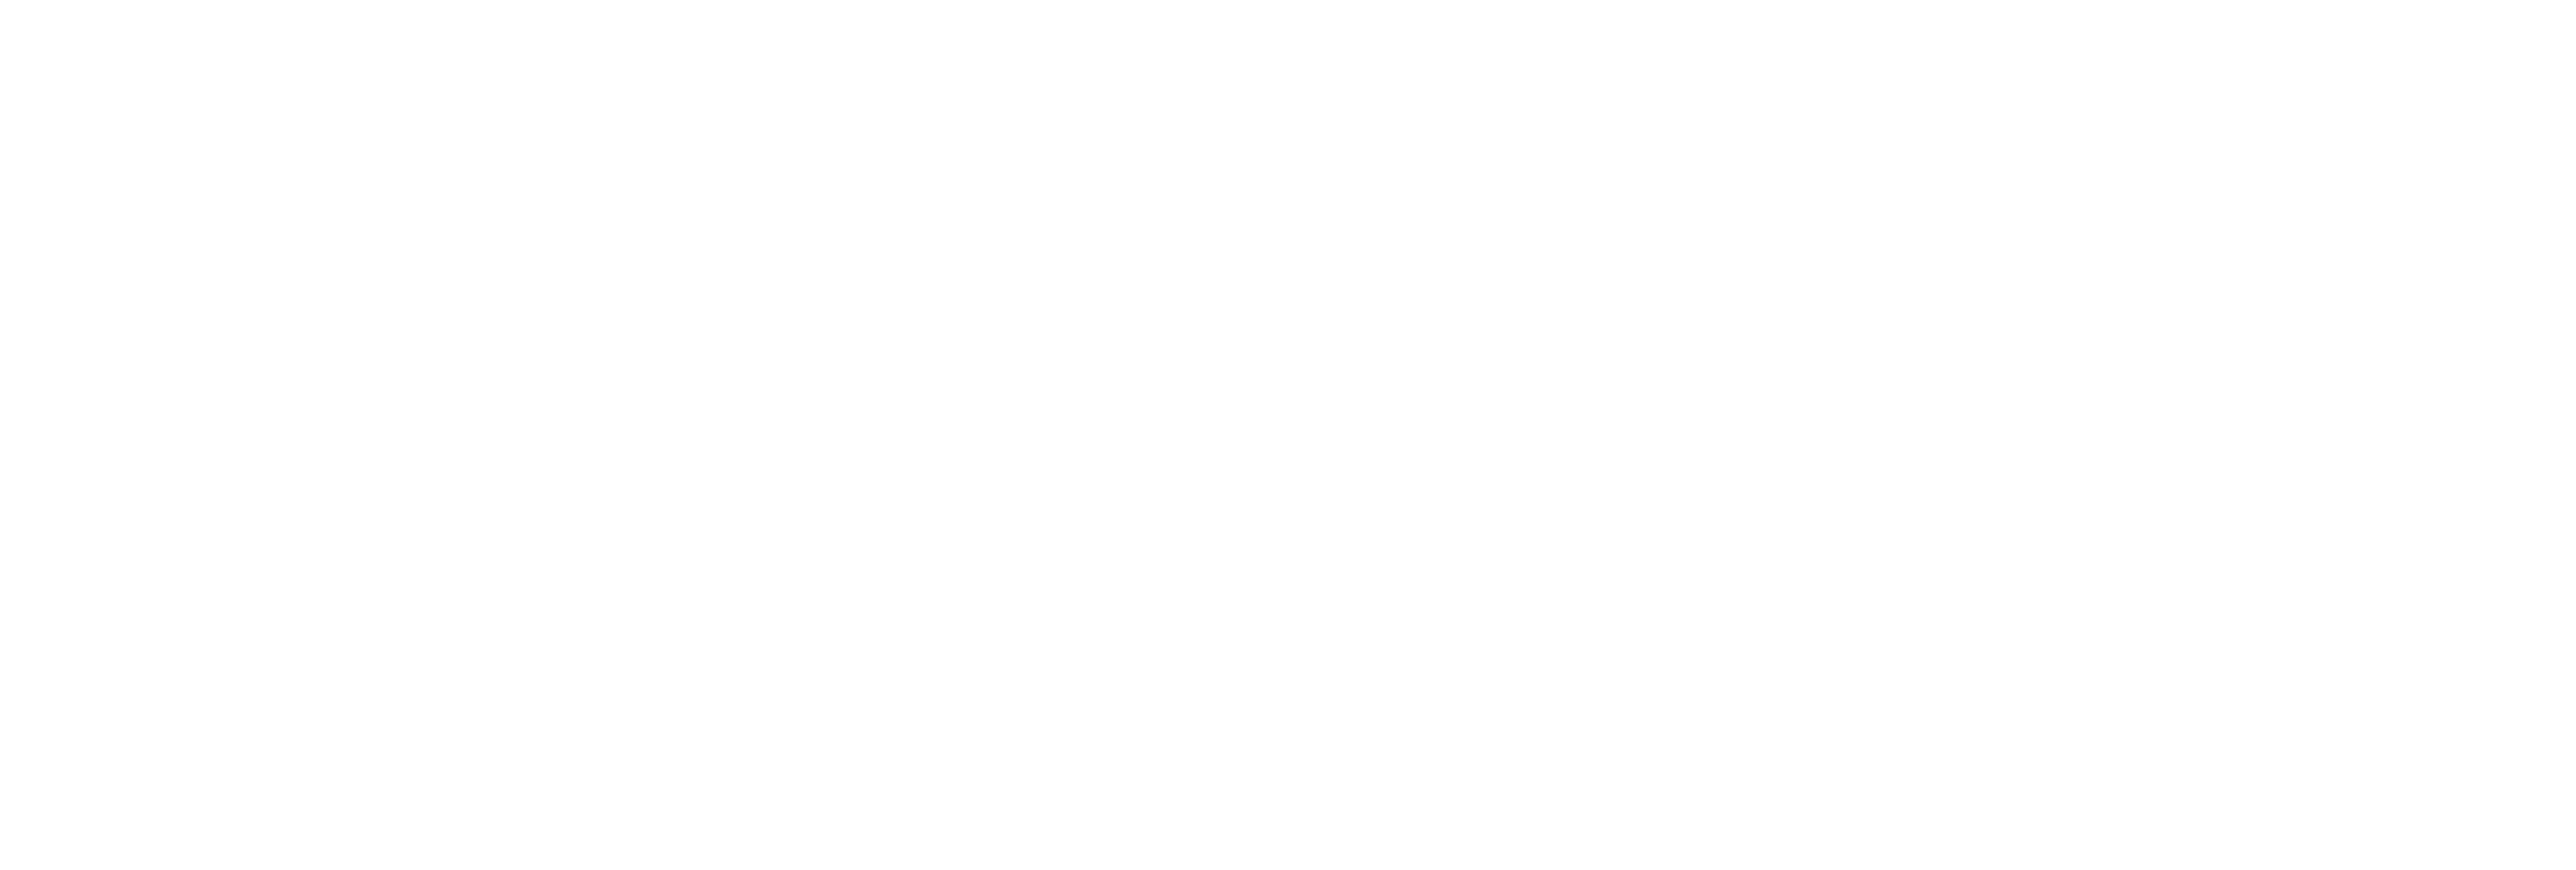 AniCura Canido Clínica Veterinaria logo